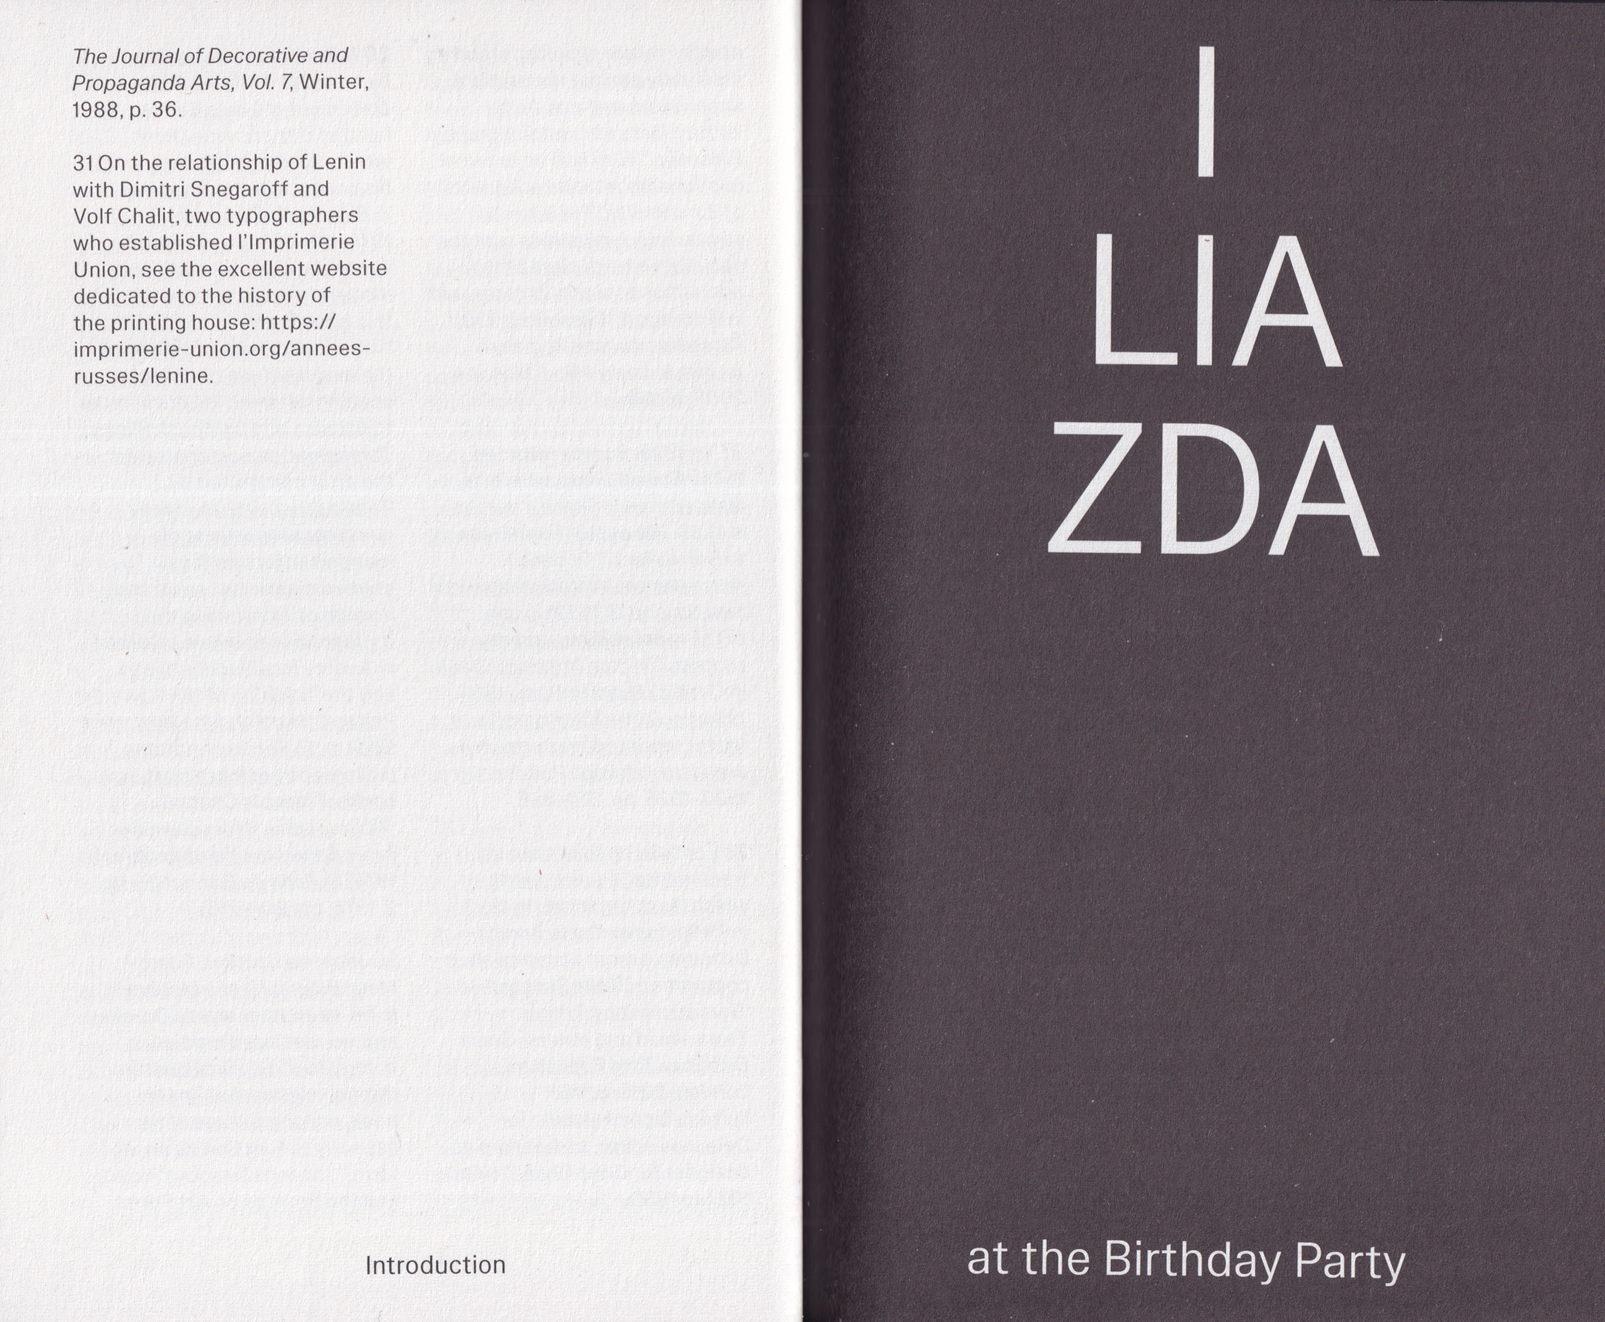 bie bao series volume 2: Iliazda at the Birthday Party